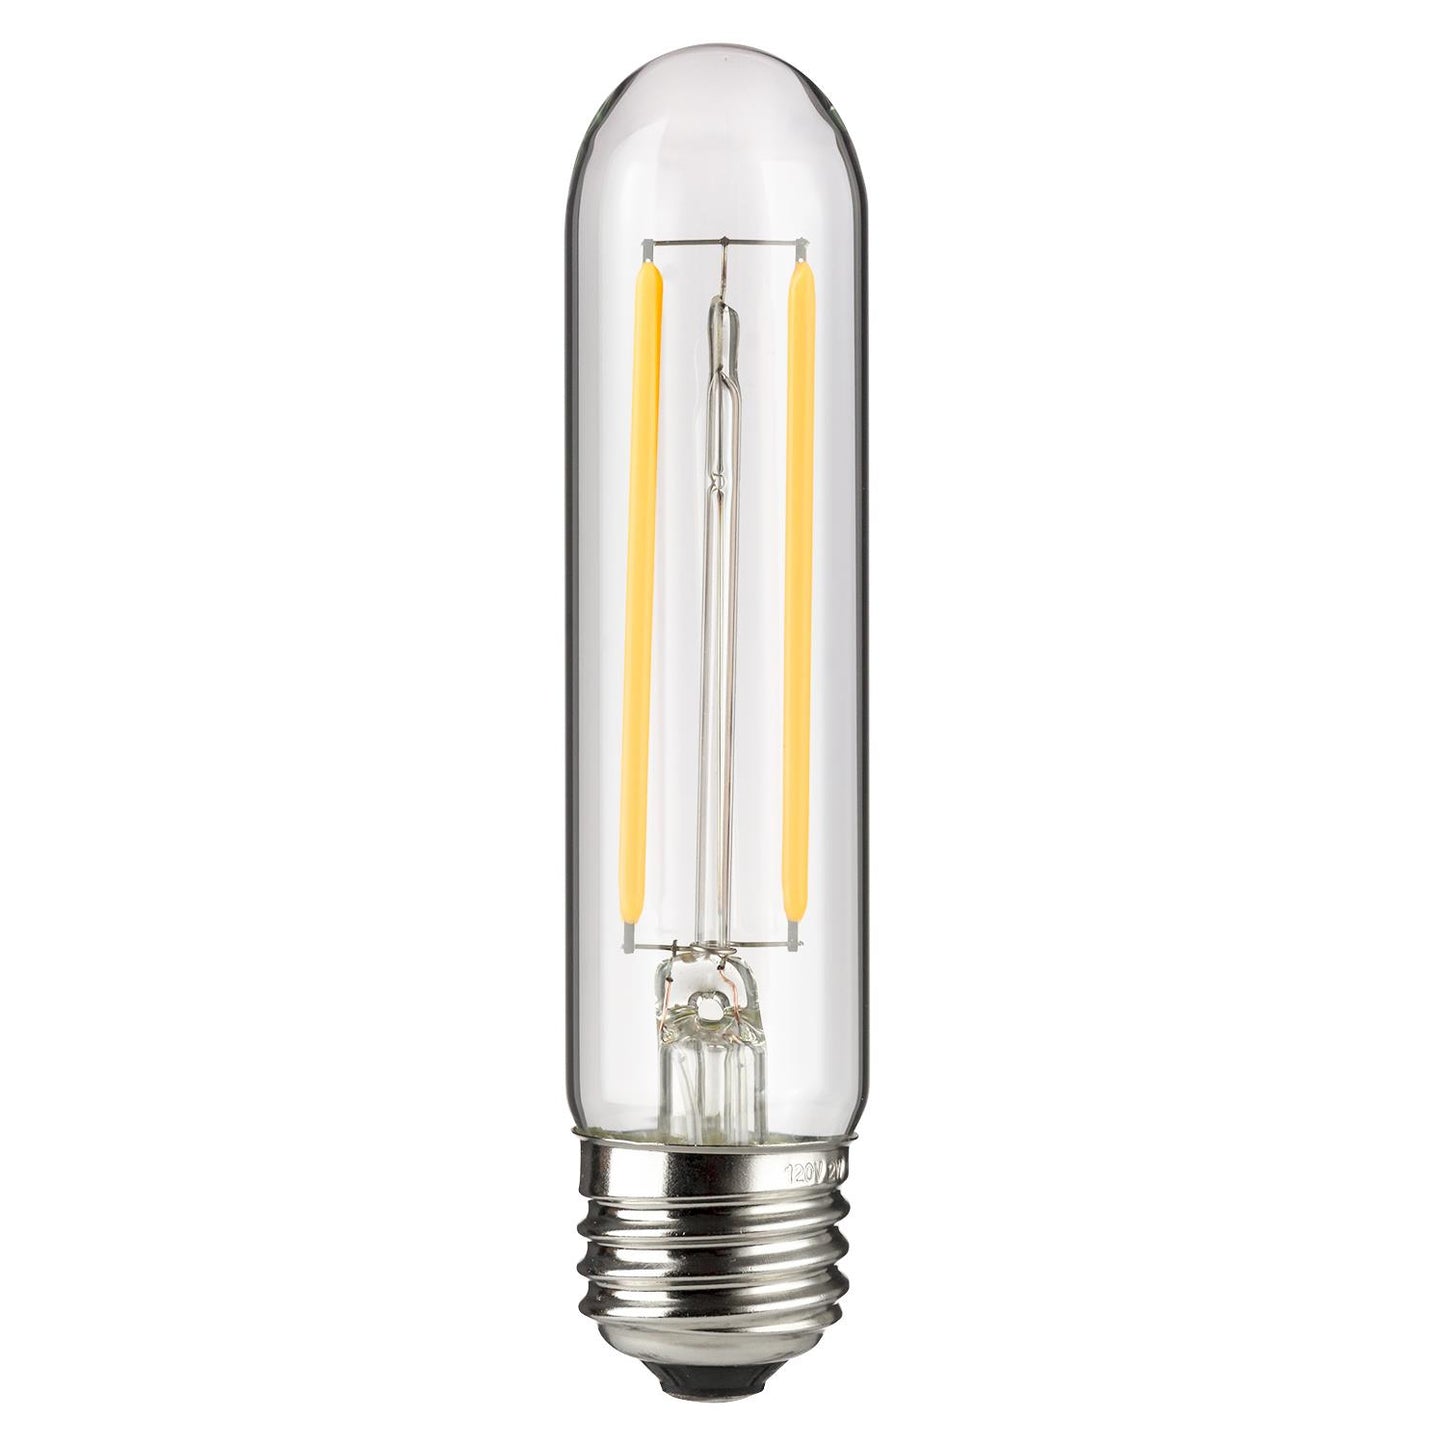 Sunlite LED Filament T10 Tubular Light Bulb, 2 Watts (25W Equivalent), 160 Lumens, Medium E26 Base, 120 Volts, Dimmable, 90 CRI, UL Listed, Clear, 5000K Daylight, 10 Pack